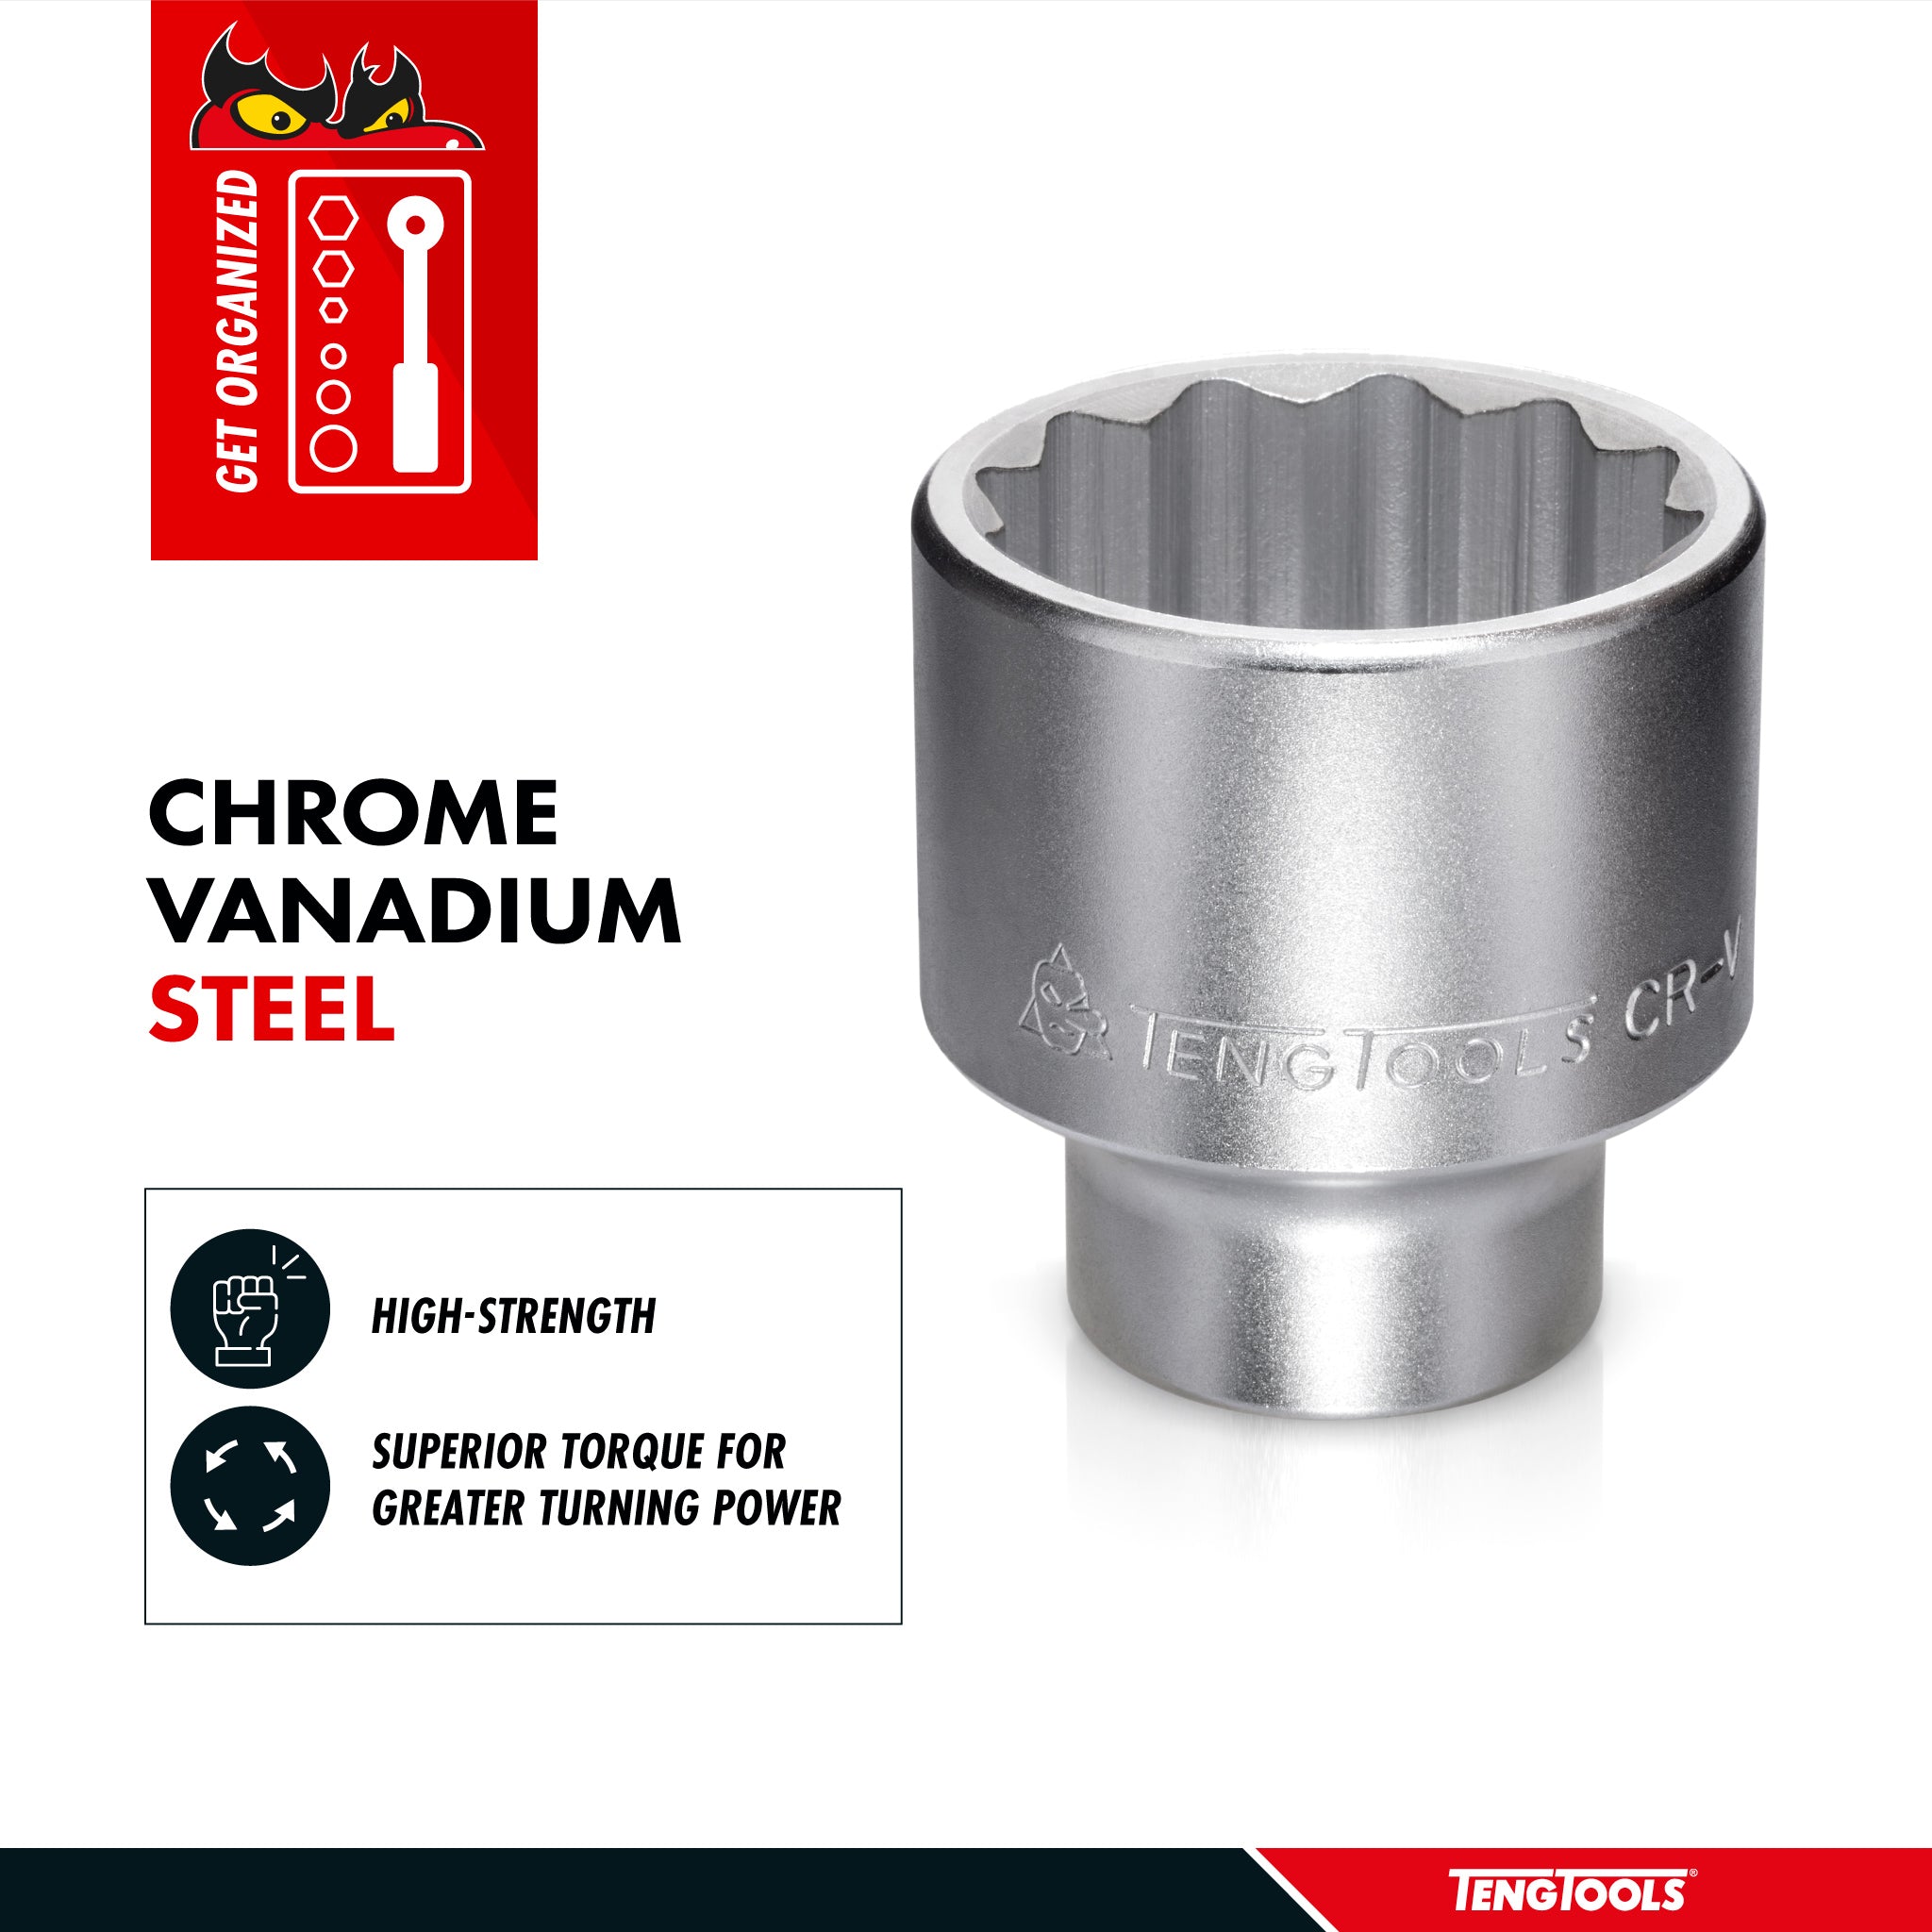 Teng Tools 1 Inch Drive 12 Point Metric Shallow Chrome Vanadium Sockets - 80mm